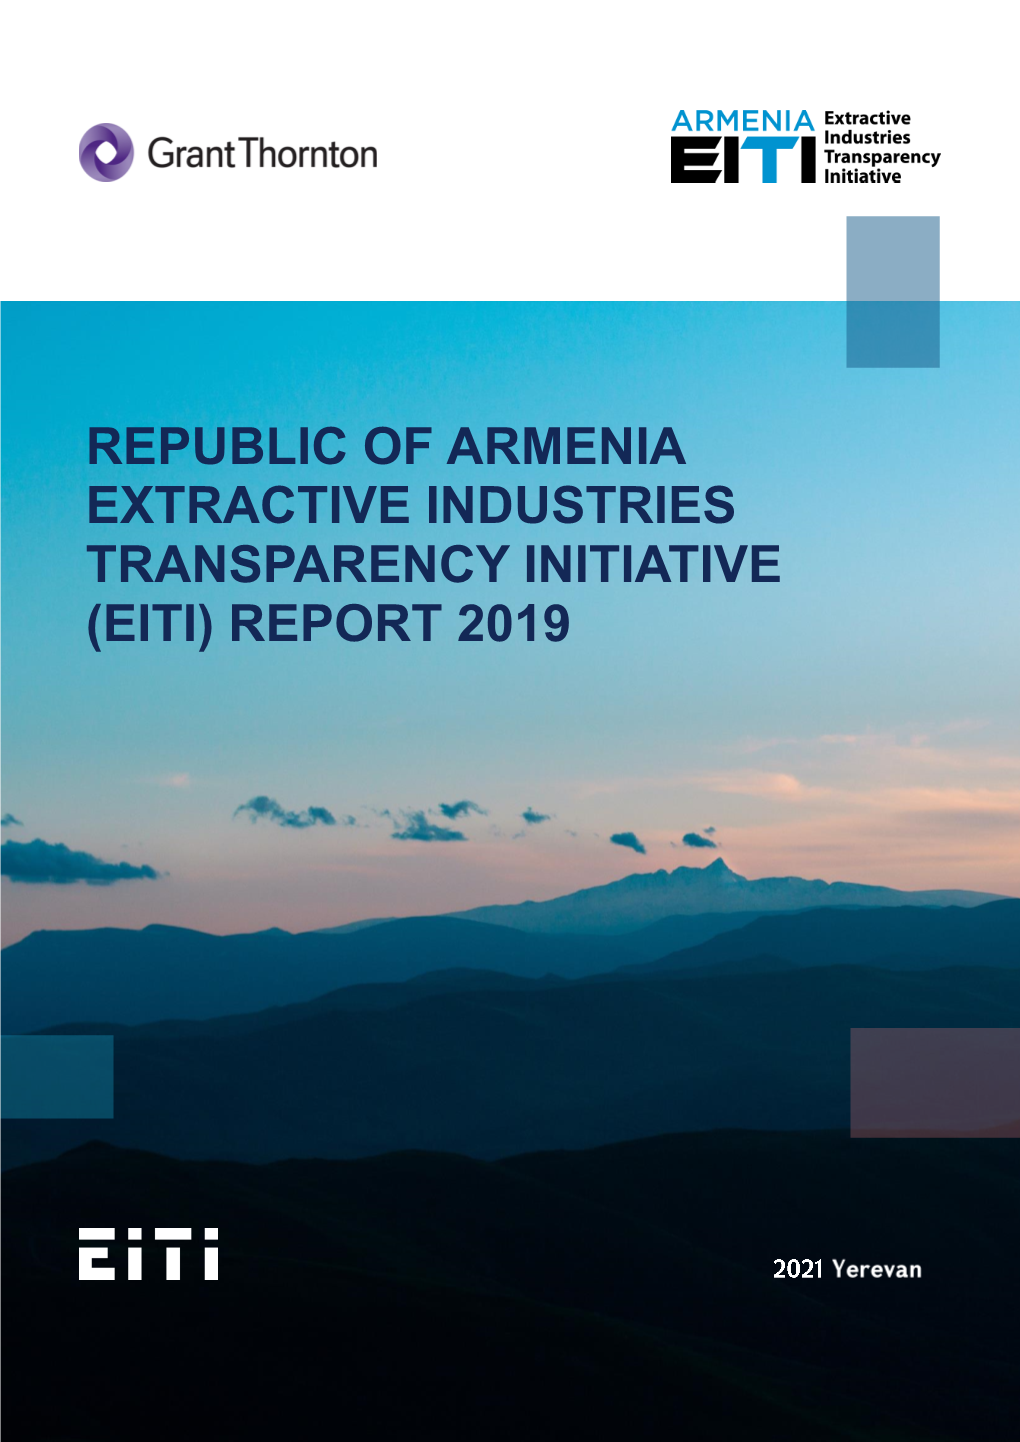 Third Eiti Report of Armenia, 2019